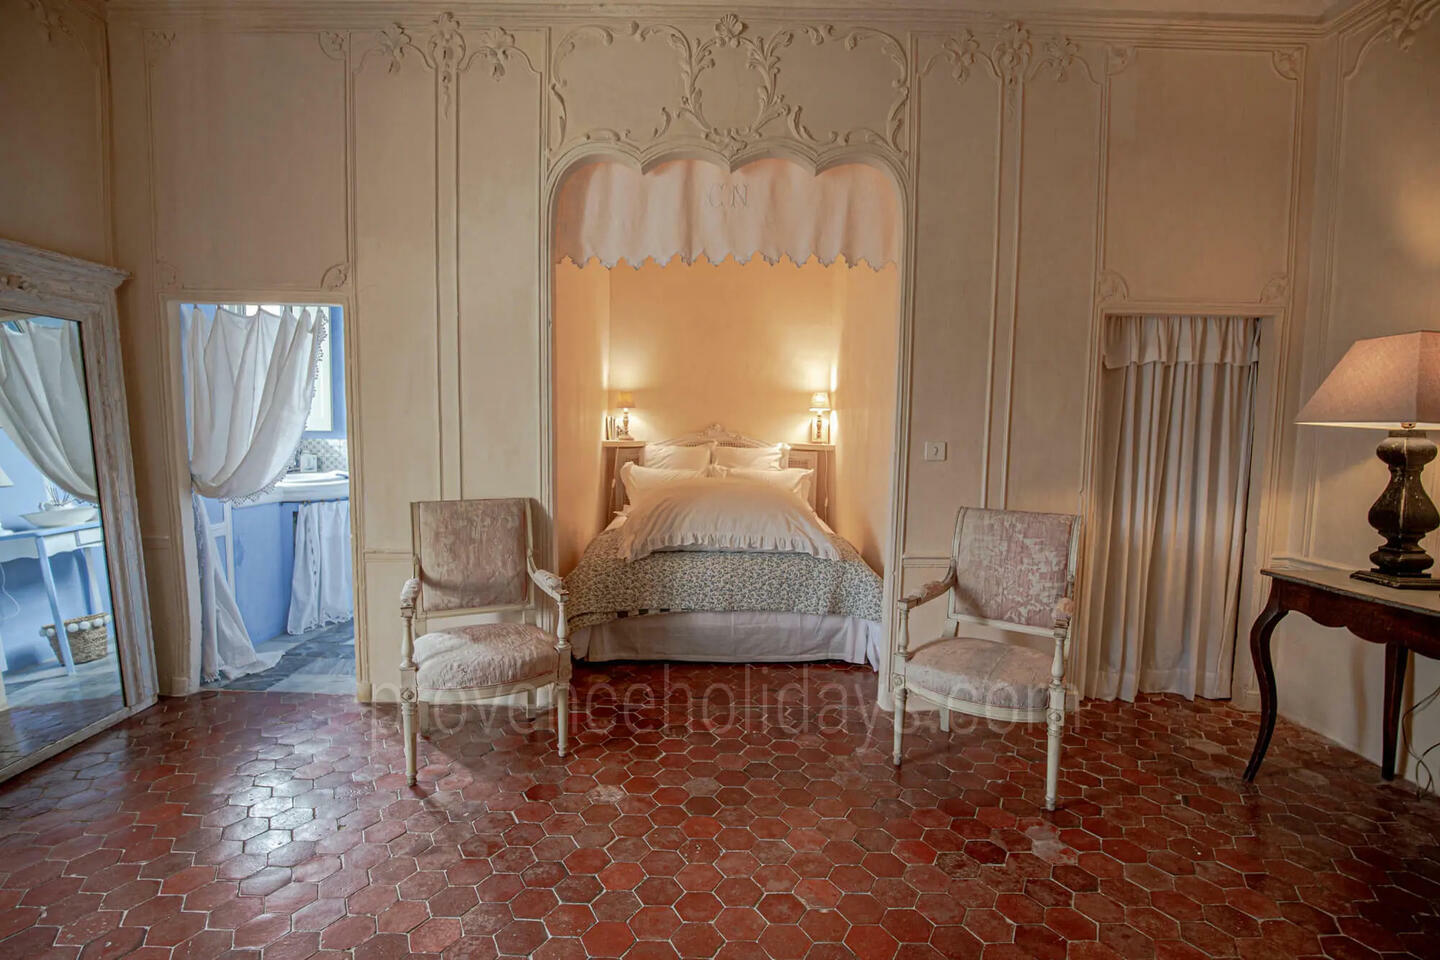 79 - Château de Gignac: Villa: Interior